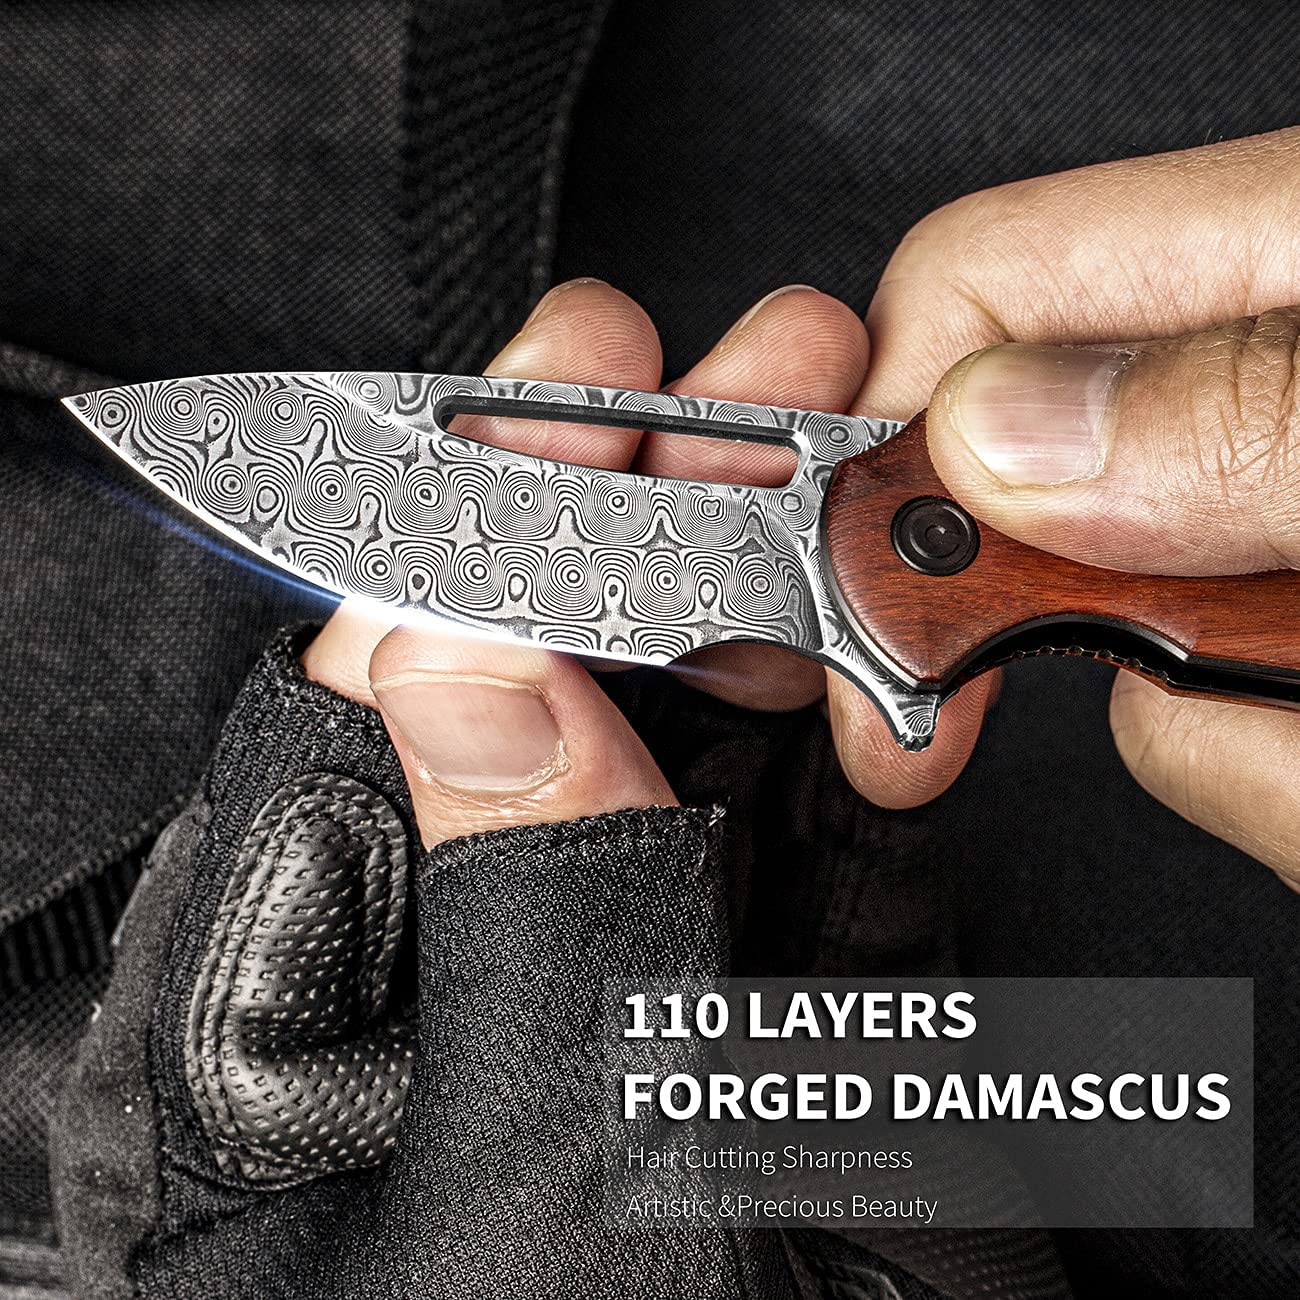 CIVIVI Odium Knife, Damascus Blade + Cuibourtia Wood Handle #C2010DS-1